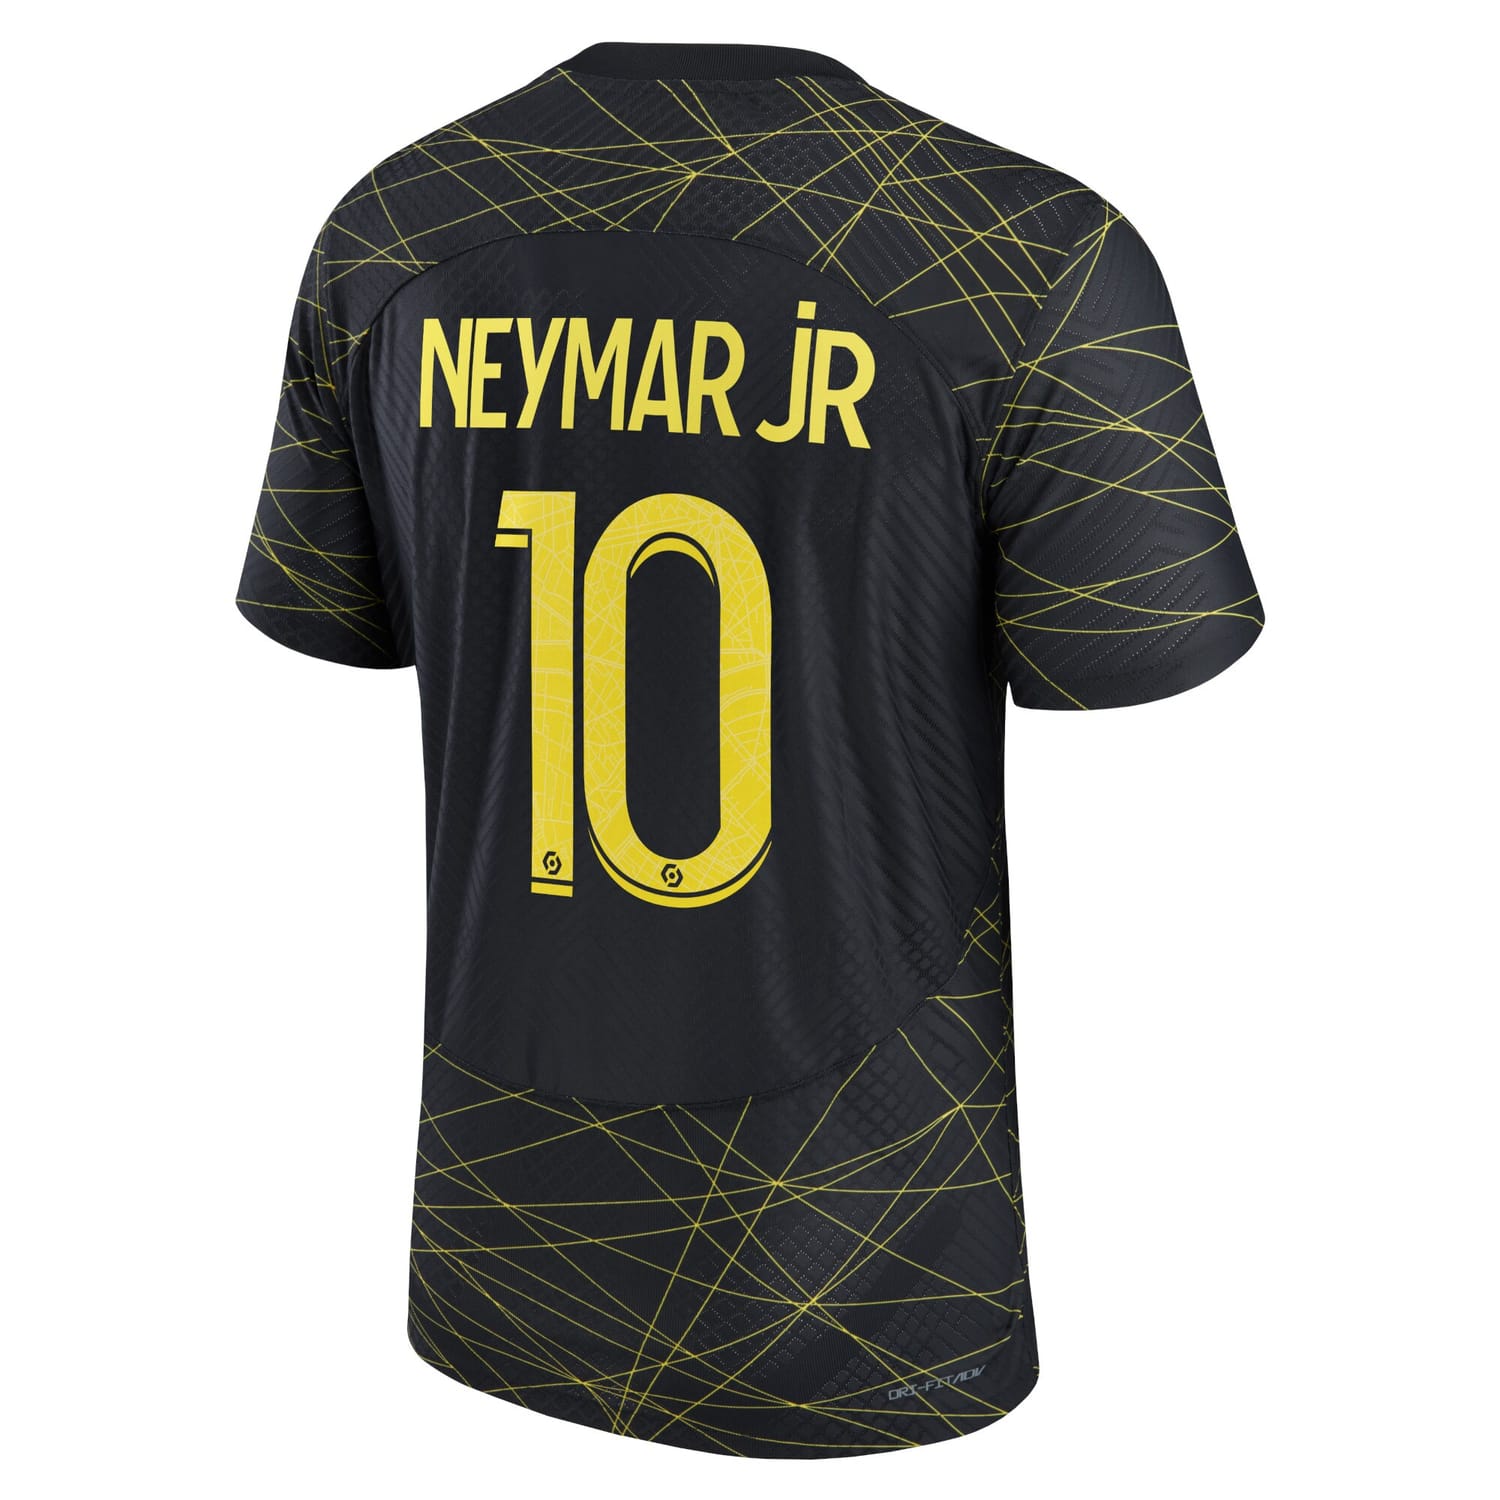 Ligue 1 Paris Saint-Germain Fourth Authentic Jersey Shirt 2022-23 player Neymar Jr. 10 printing for Men